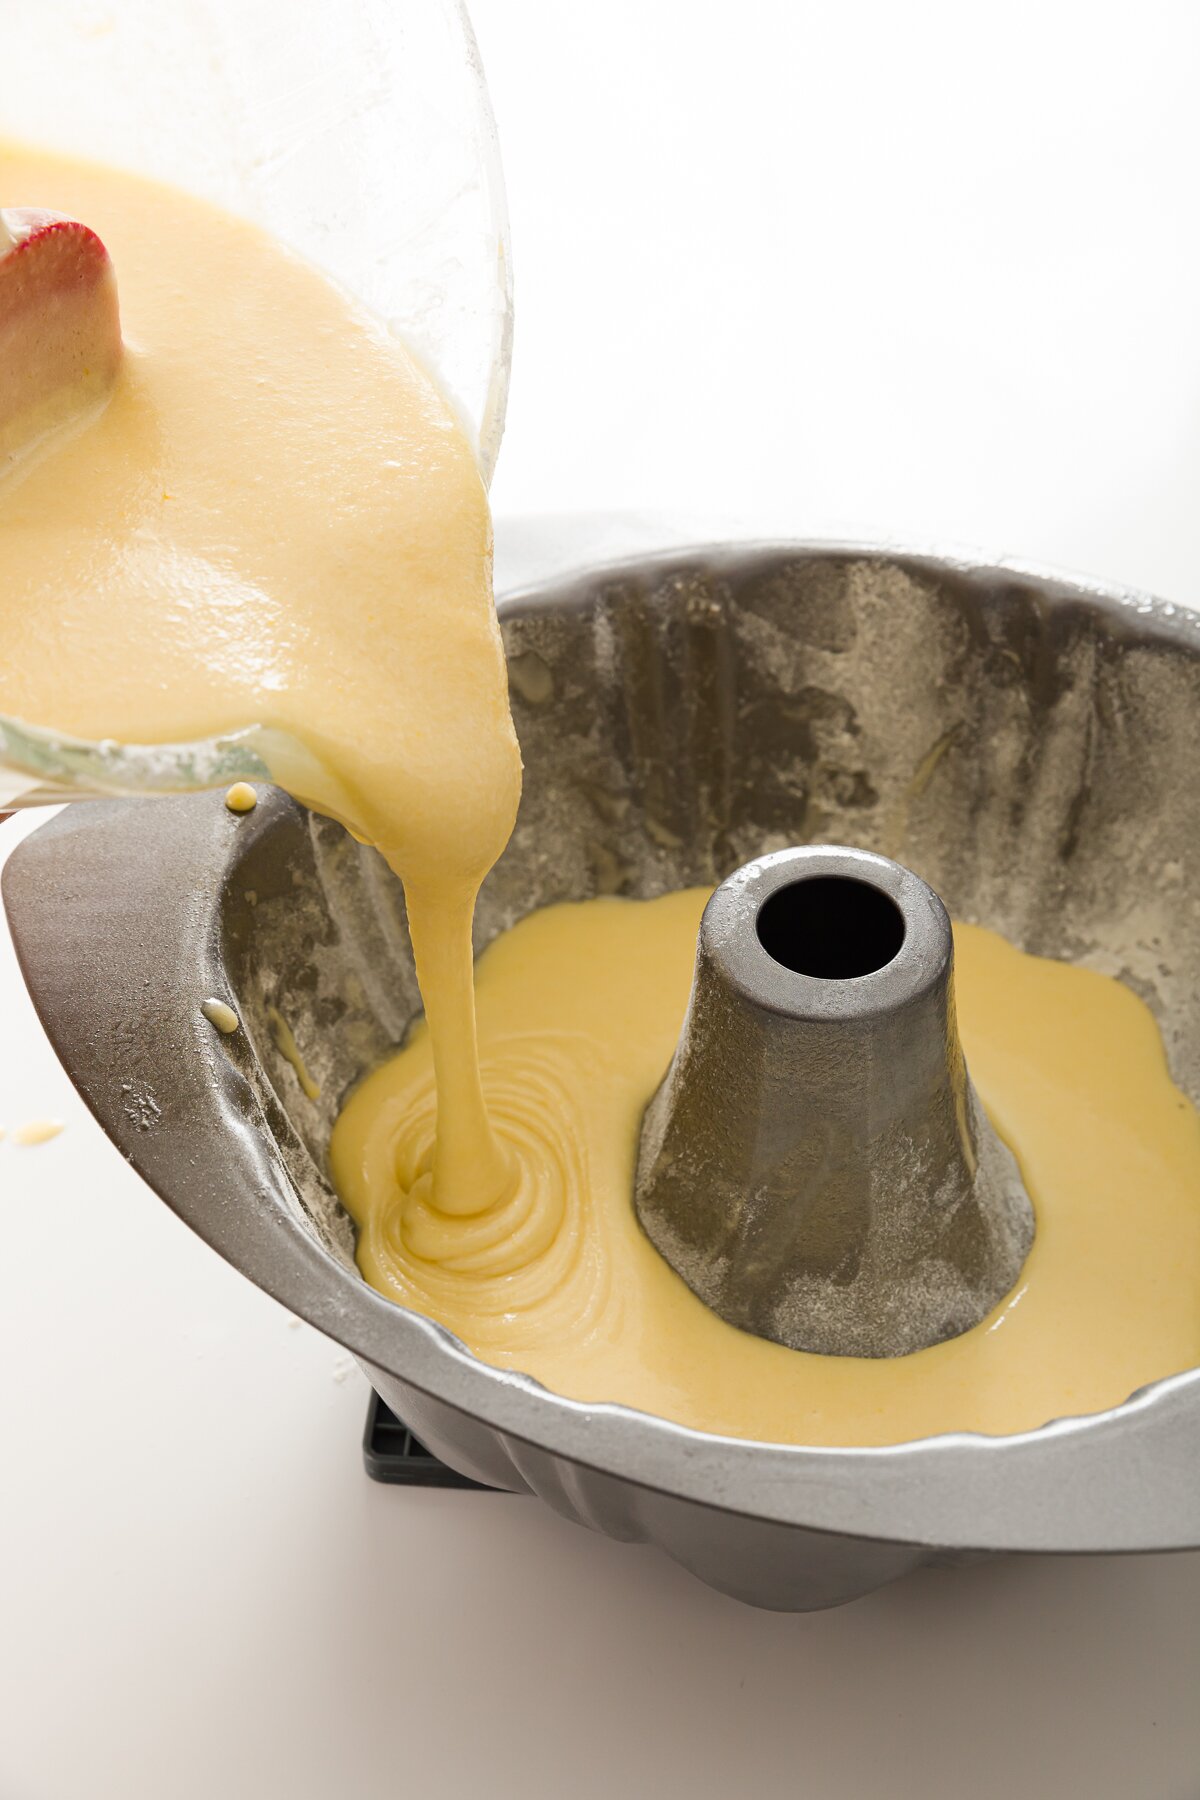 Pouring pound cake batter into a bundt pan